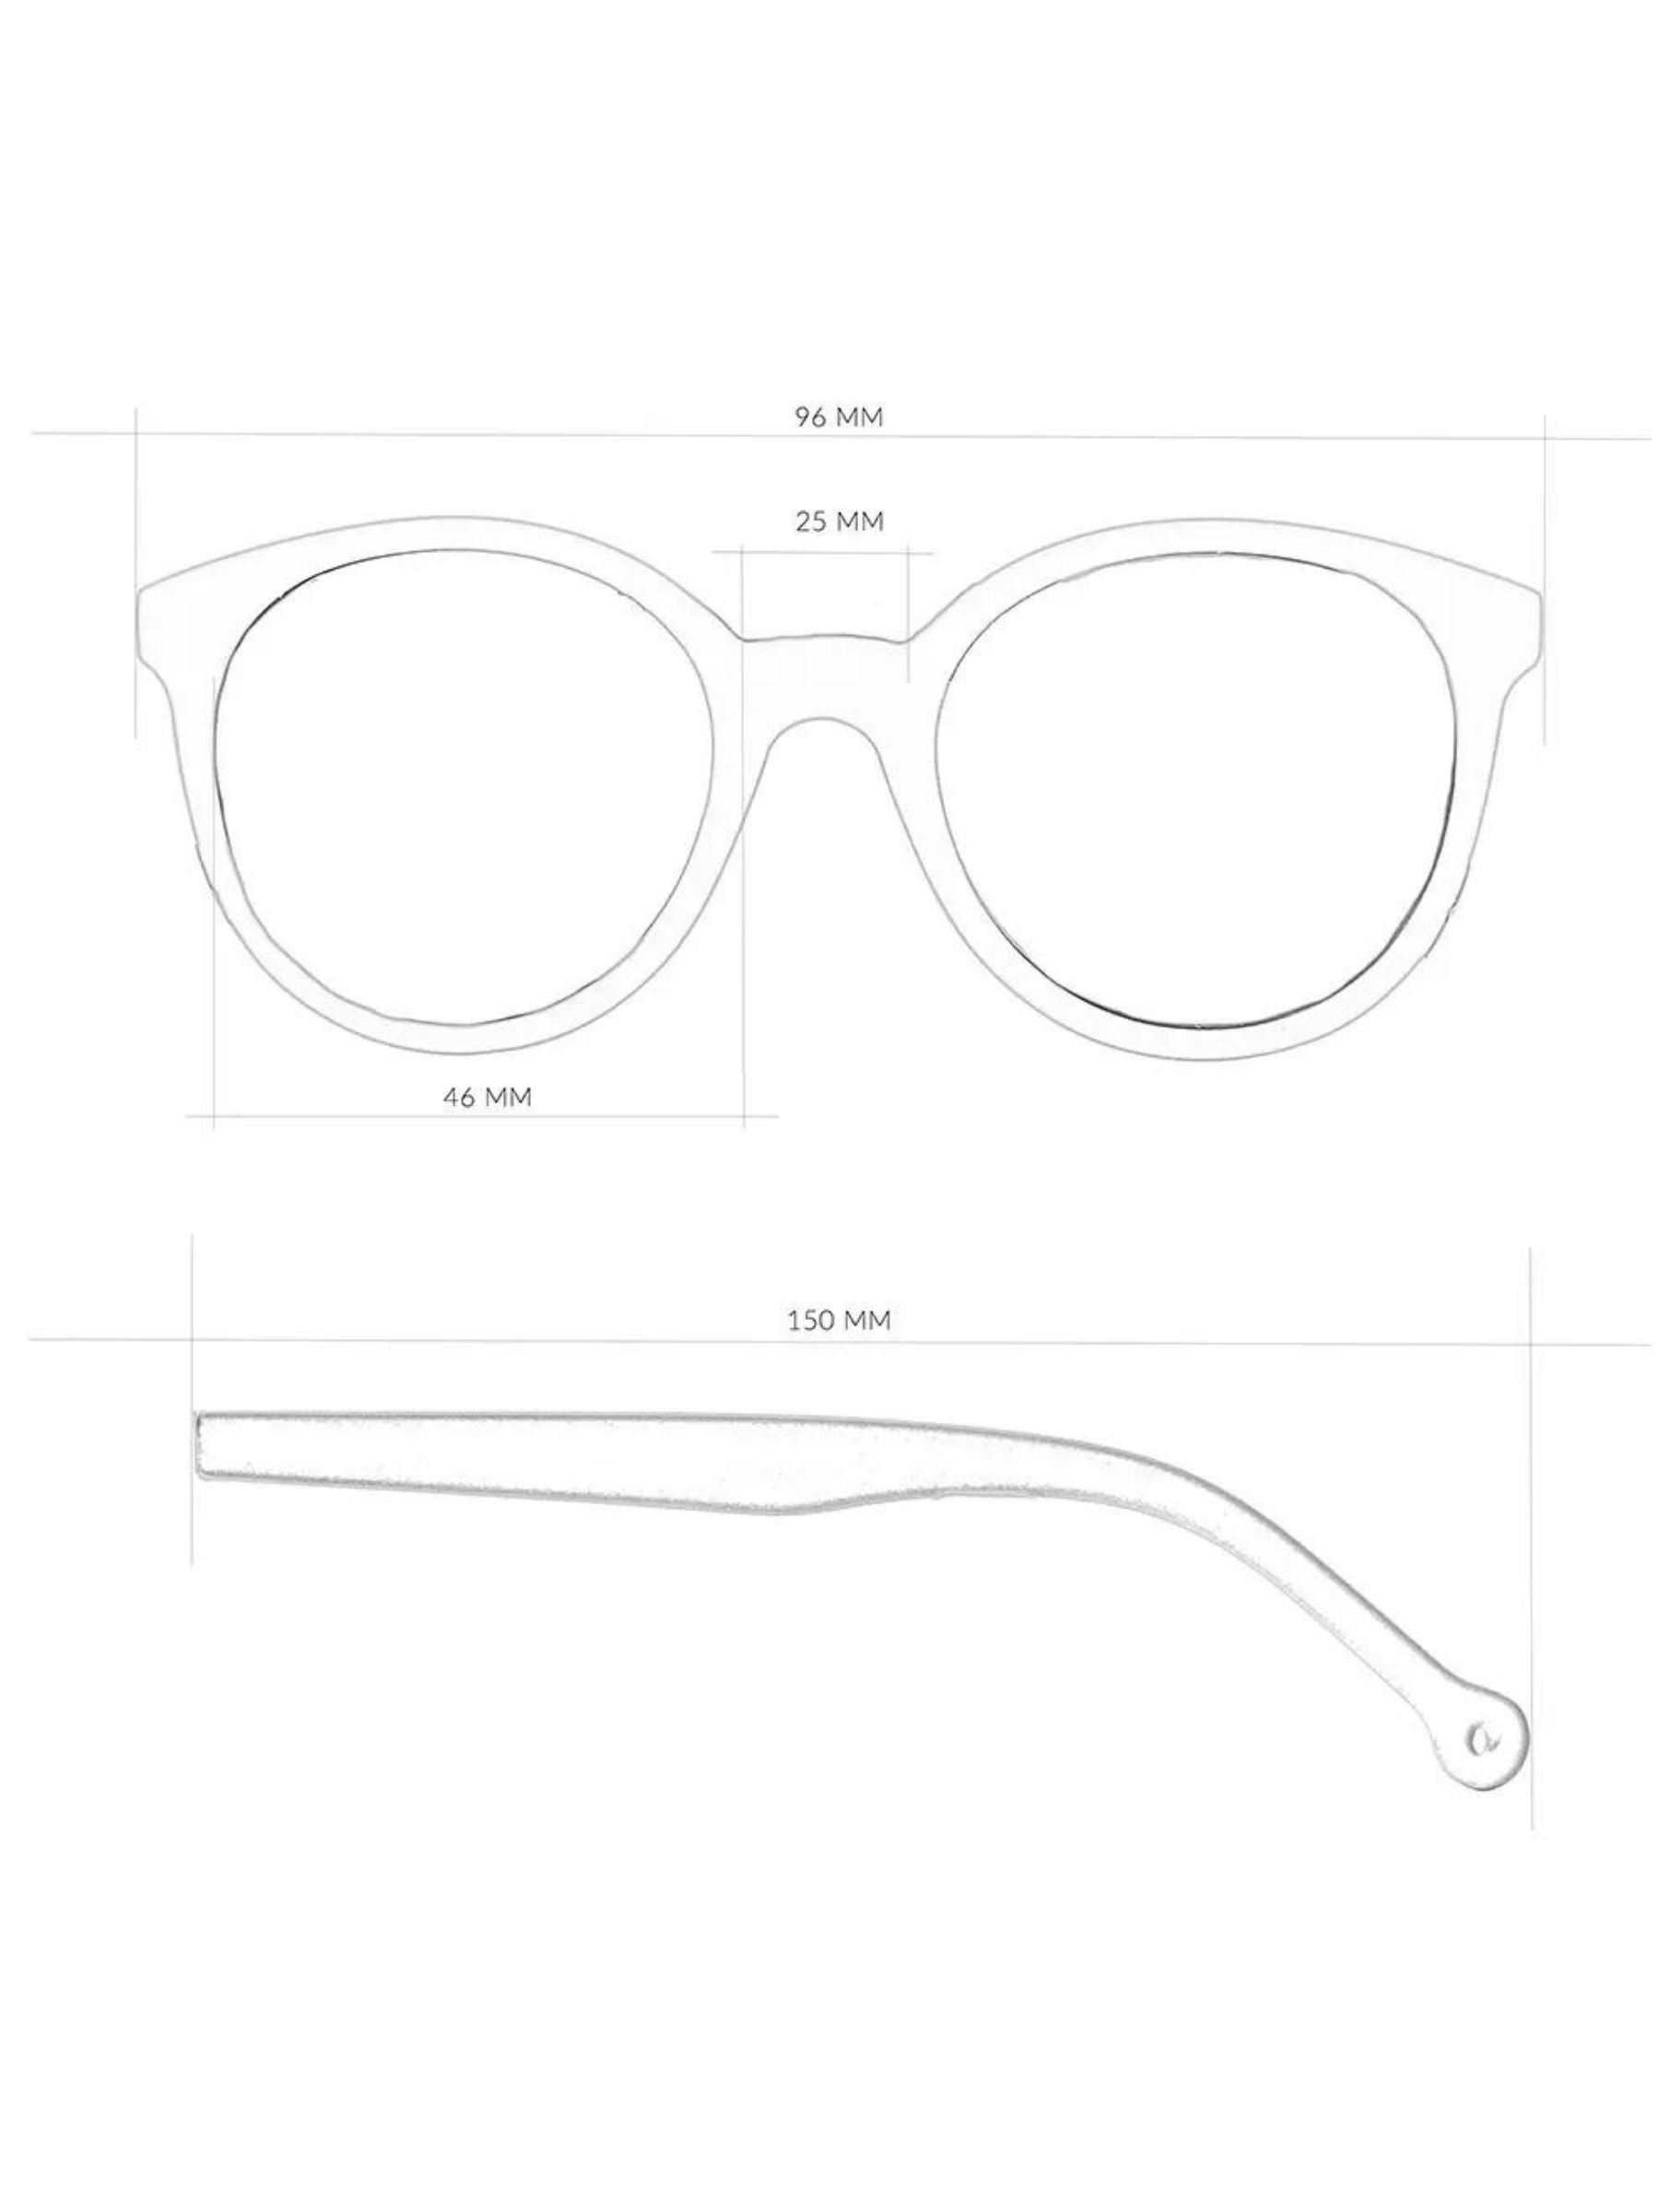 Sunglasses Via Recycled Rubber | Parafina